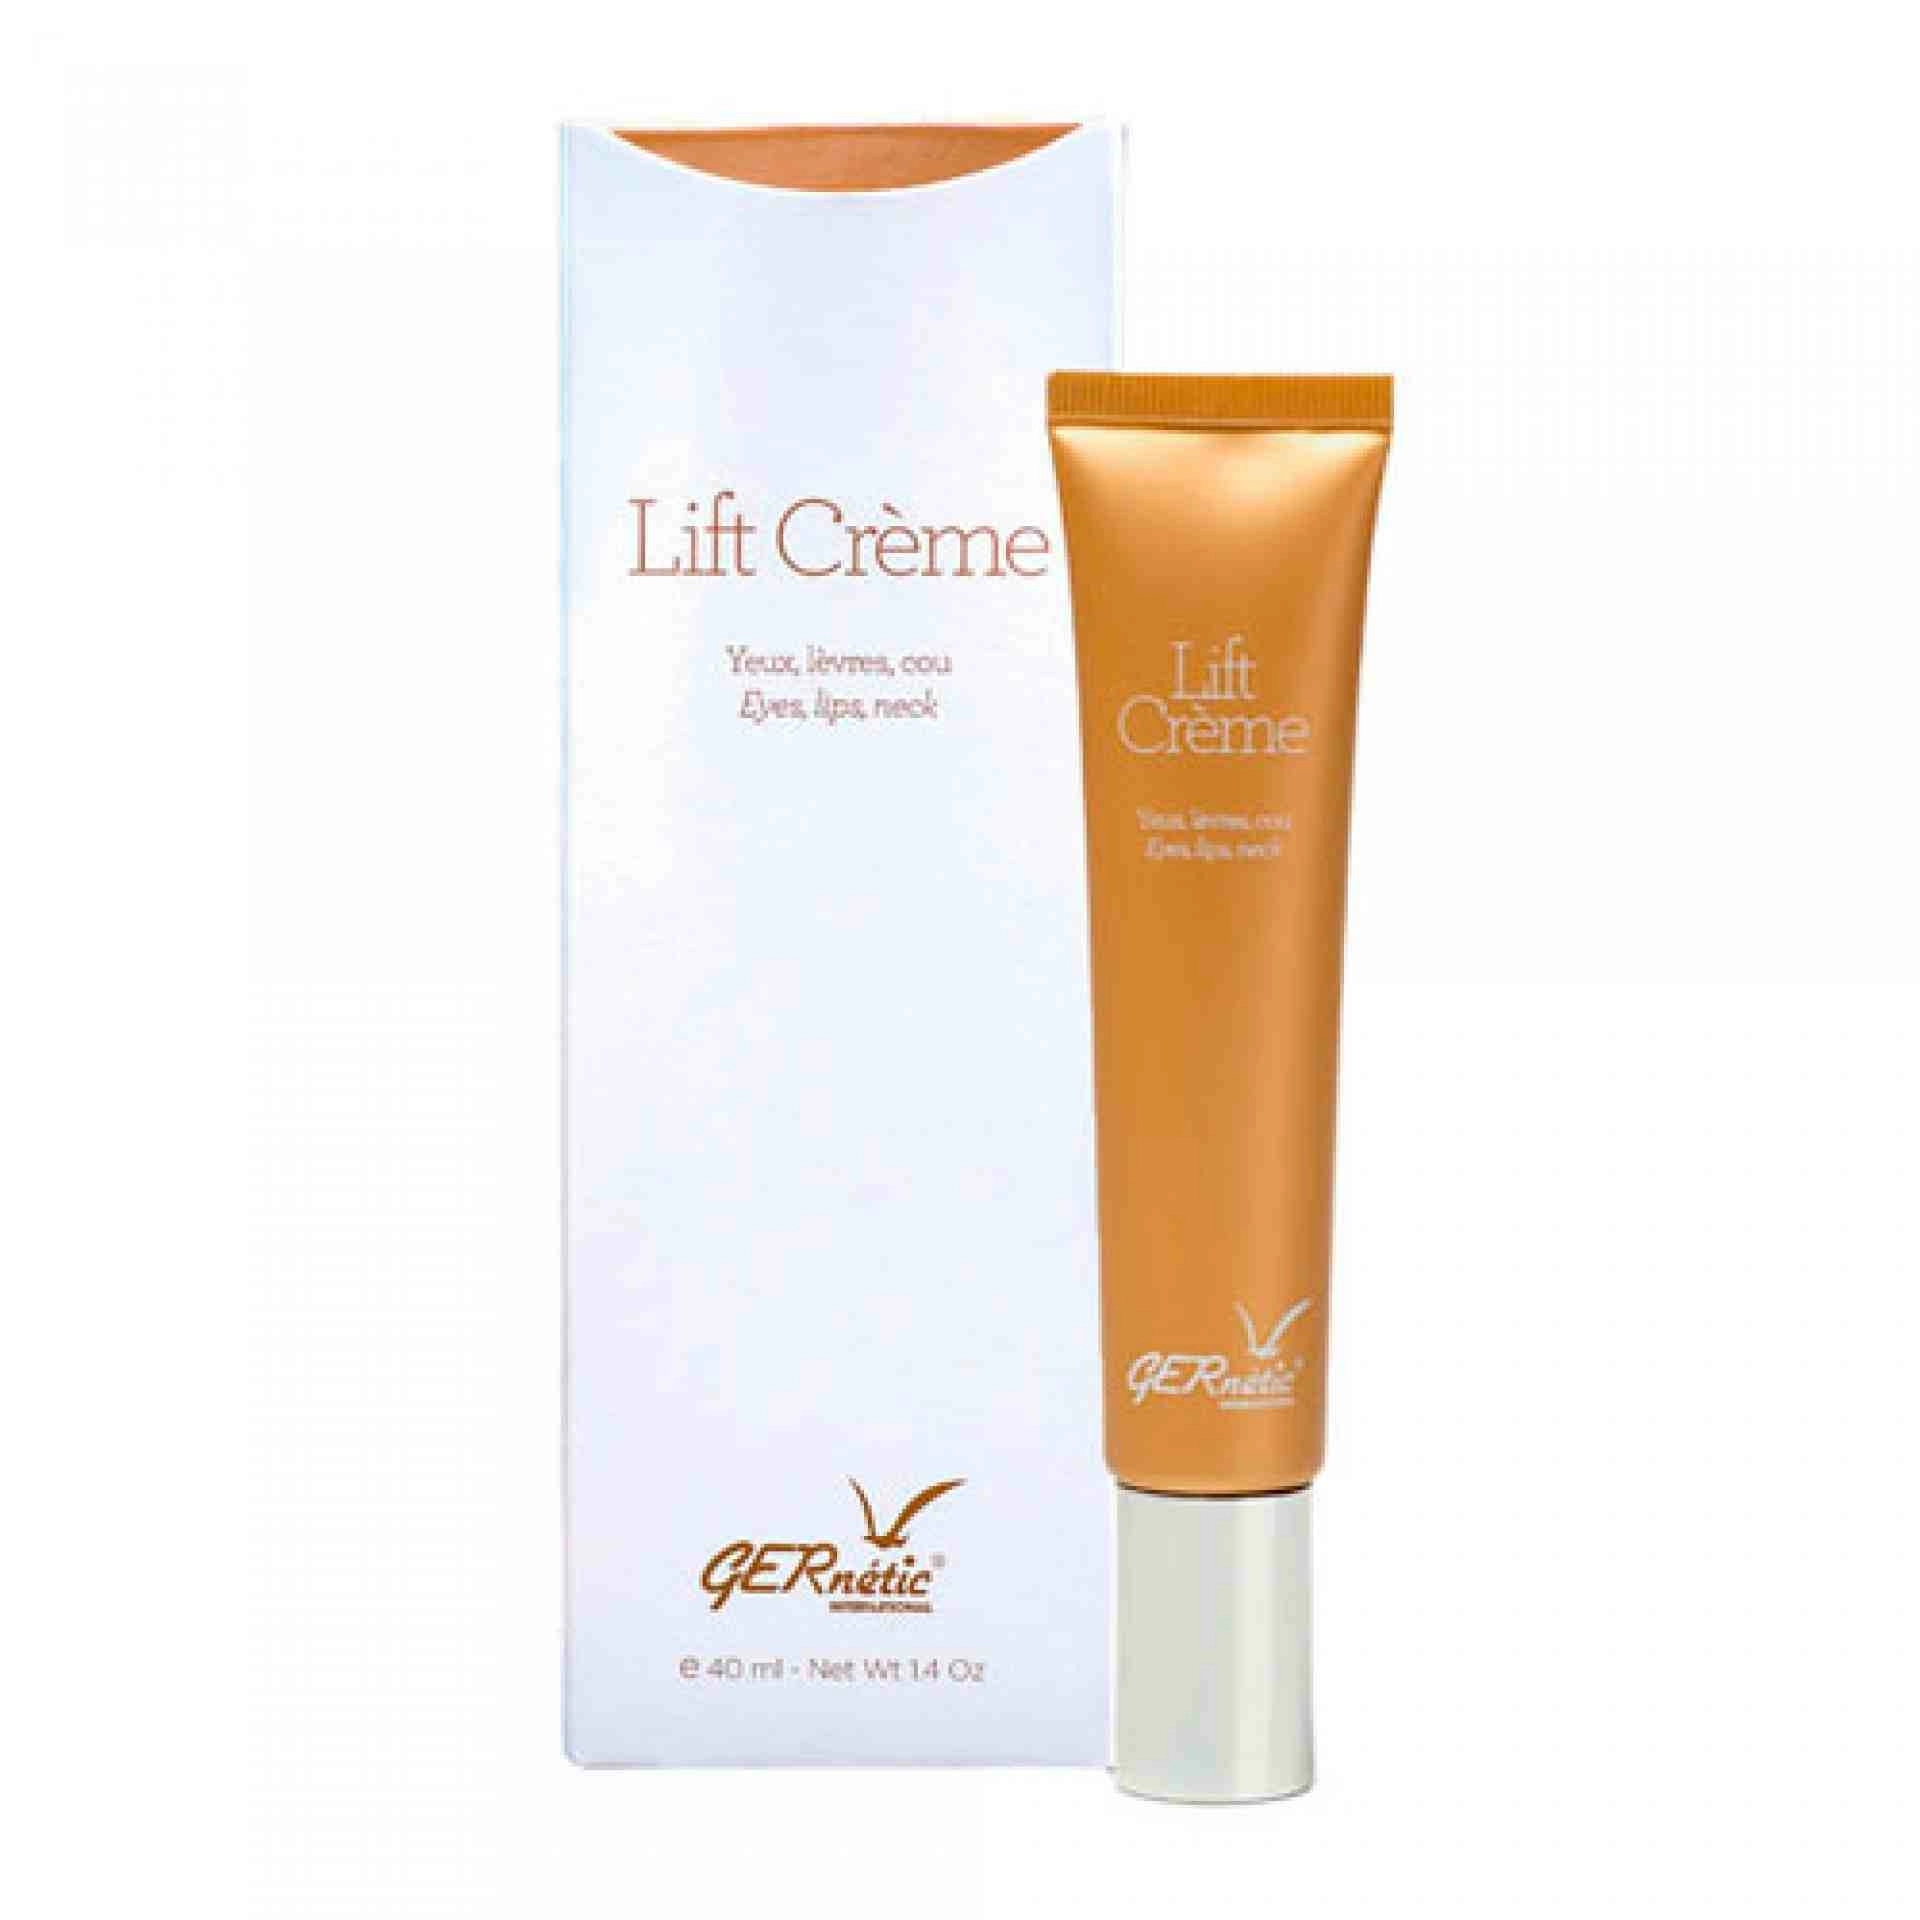 Lift Crème | Crema anti-edad 40ml - Gernétic ®